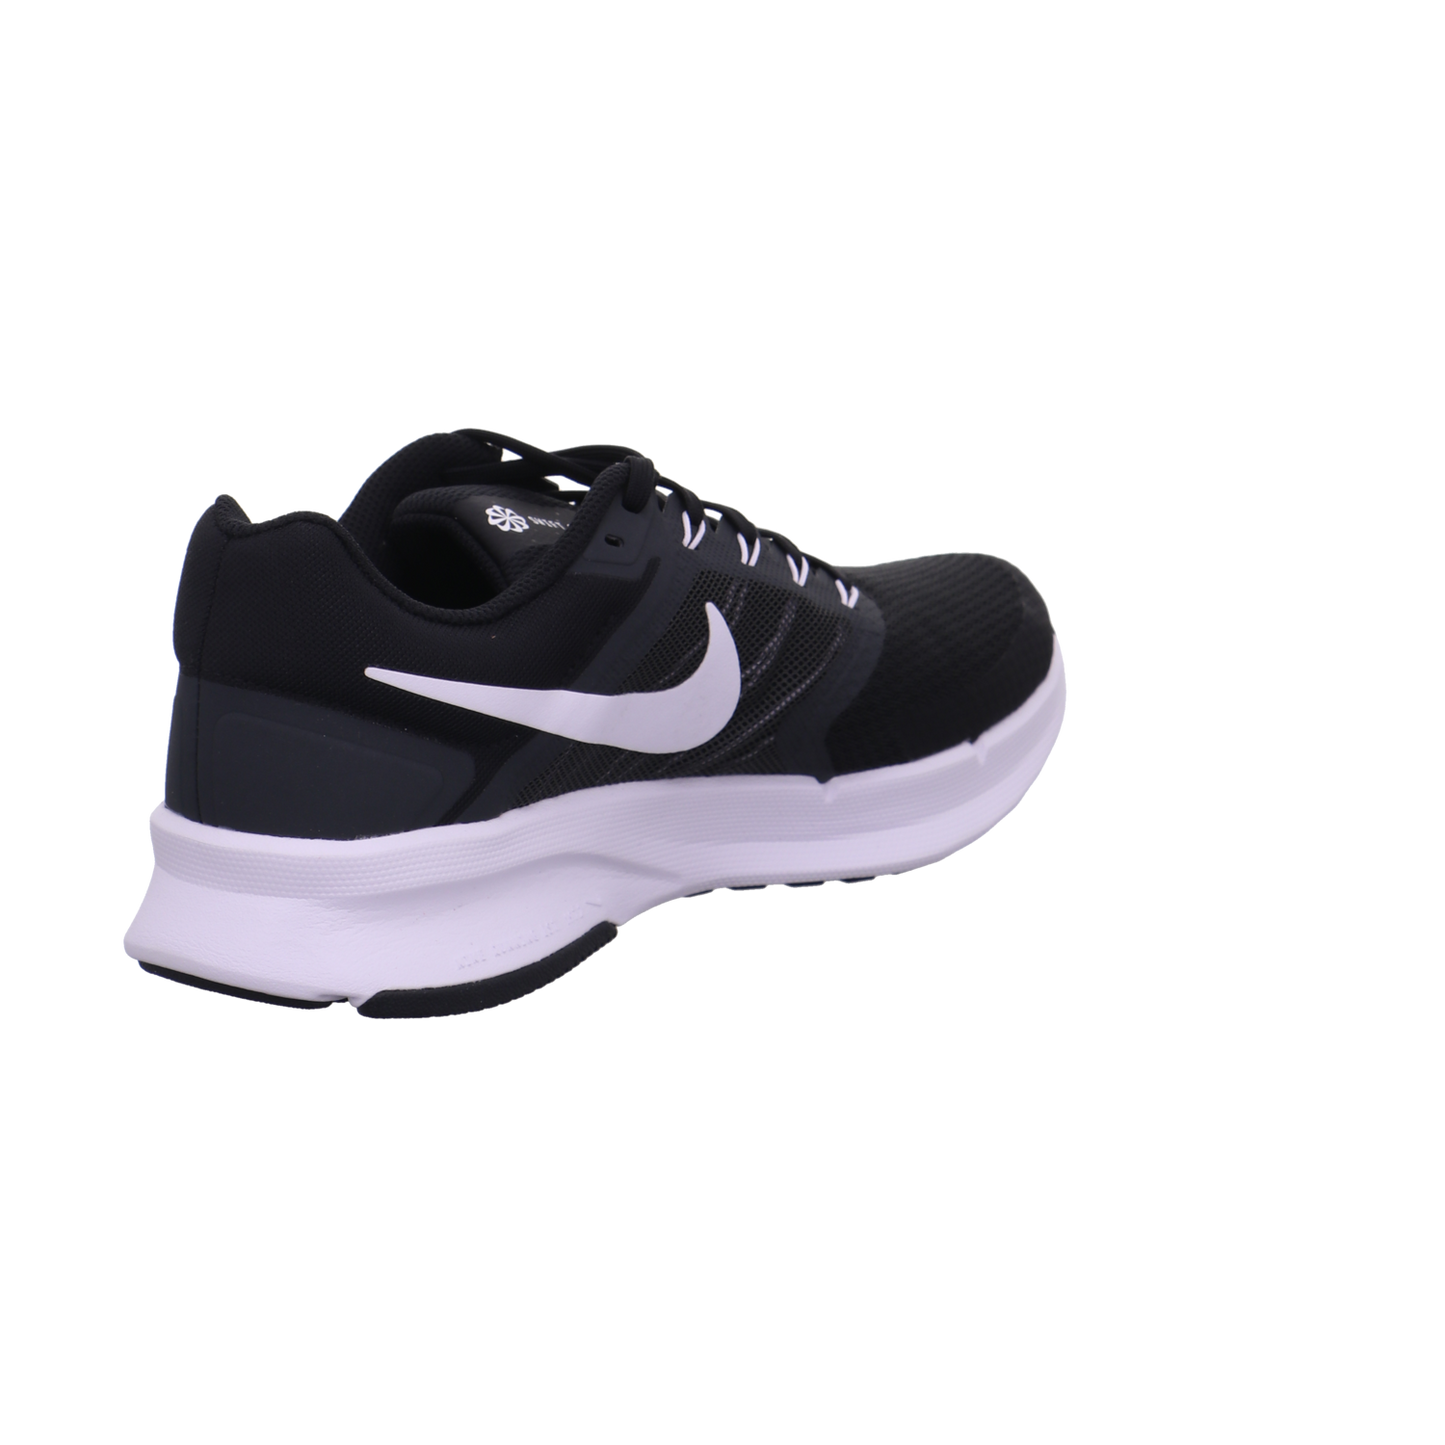 Nike Sneaker schwarz-weiß Bild5